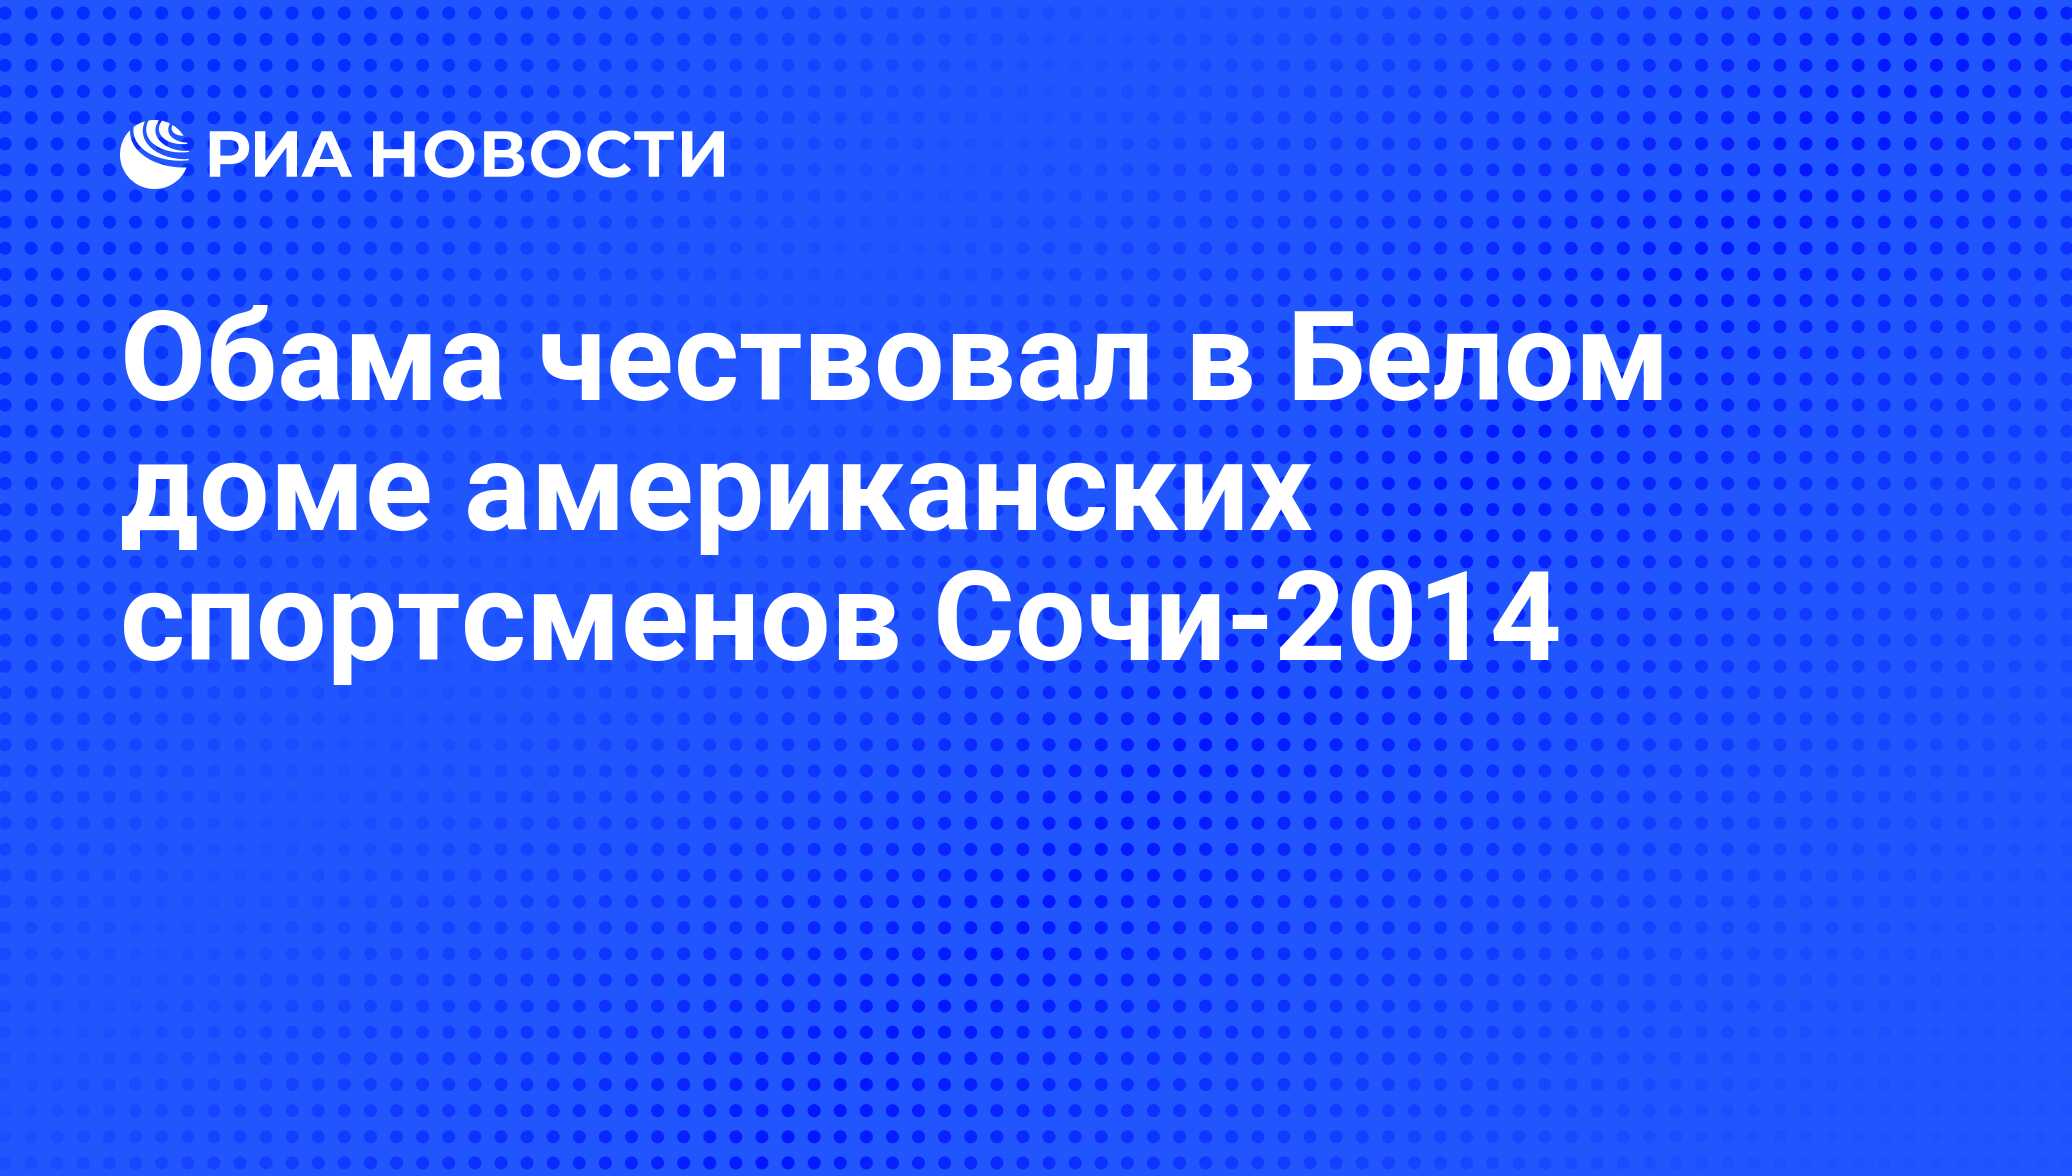 Obama Chestvoval V Belom Dome Amerikanskih Sportsmenov Sochi 2014 Ria Novosti 04 04 2014